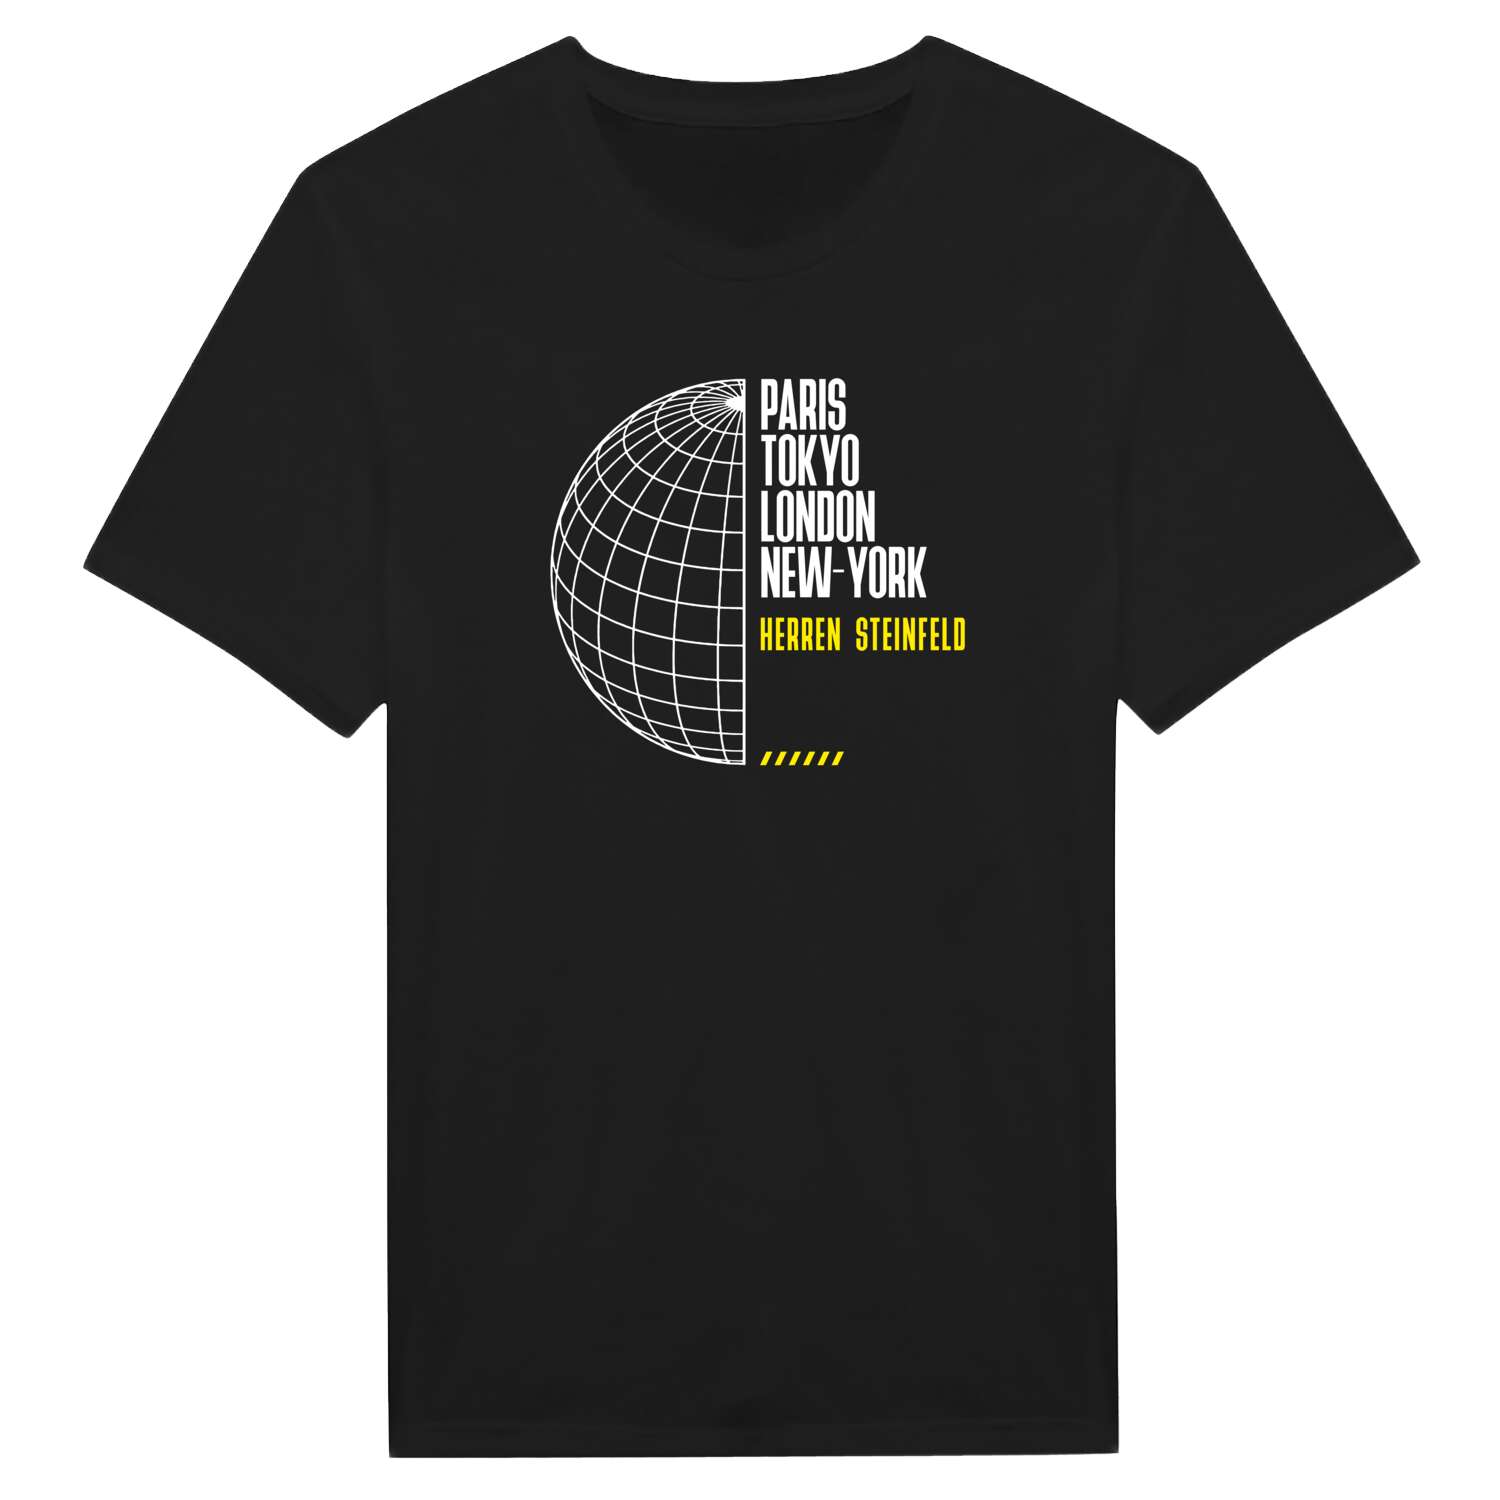 Herren Steinfeld T-Shirt »Paris Tokyo London«